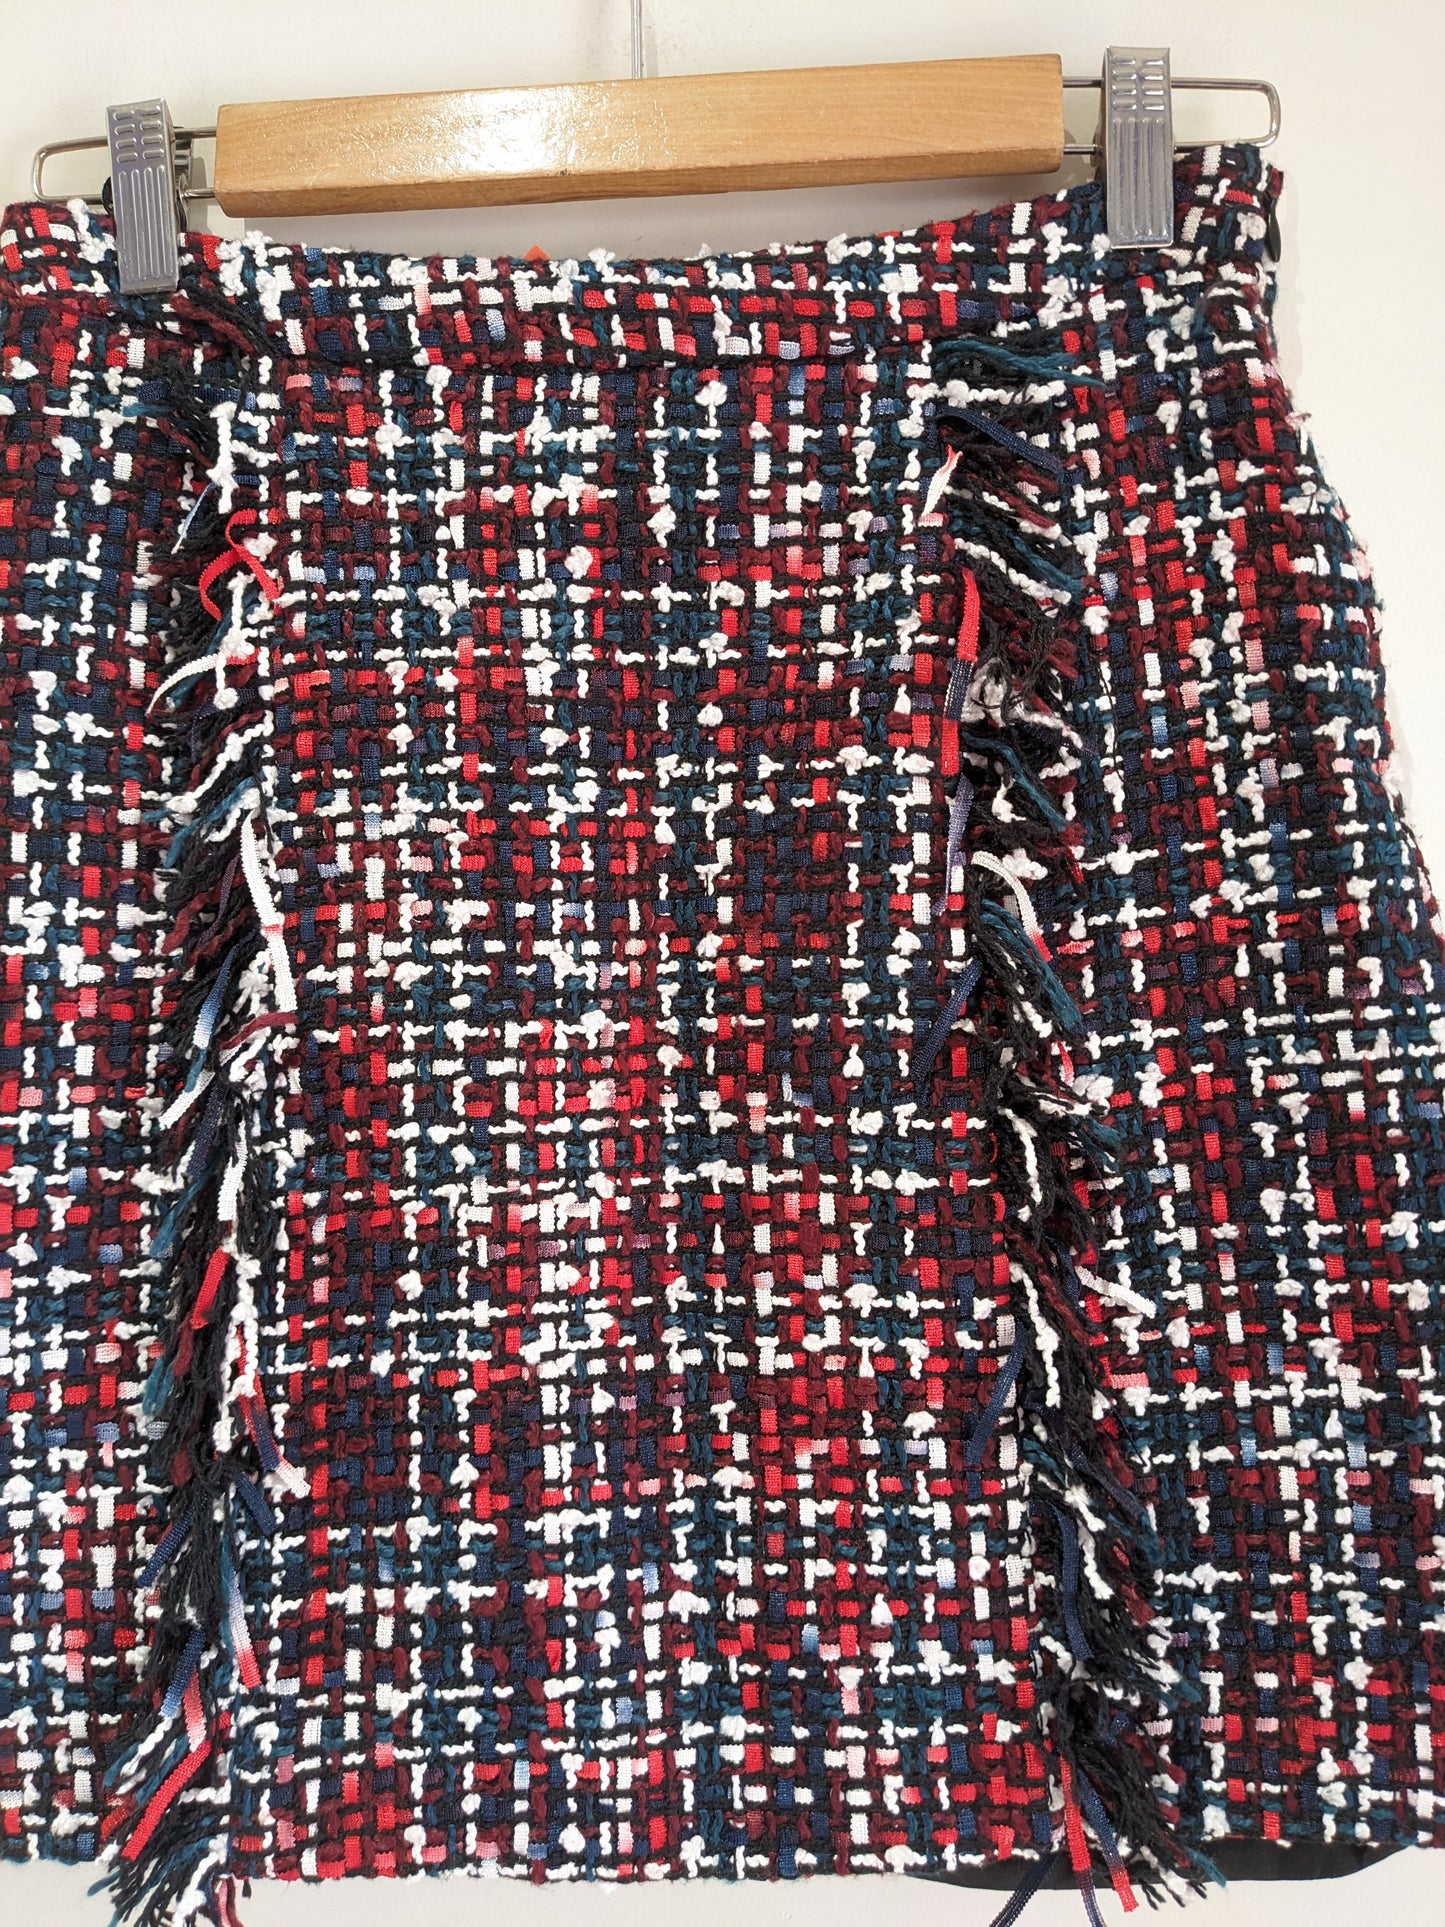 Asy Multicolored Fringe Tweed Skirt